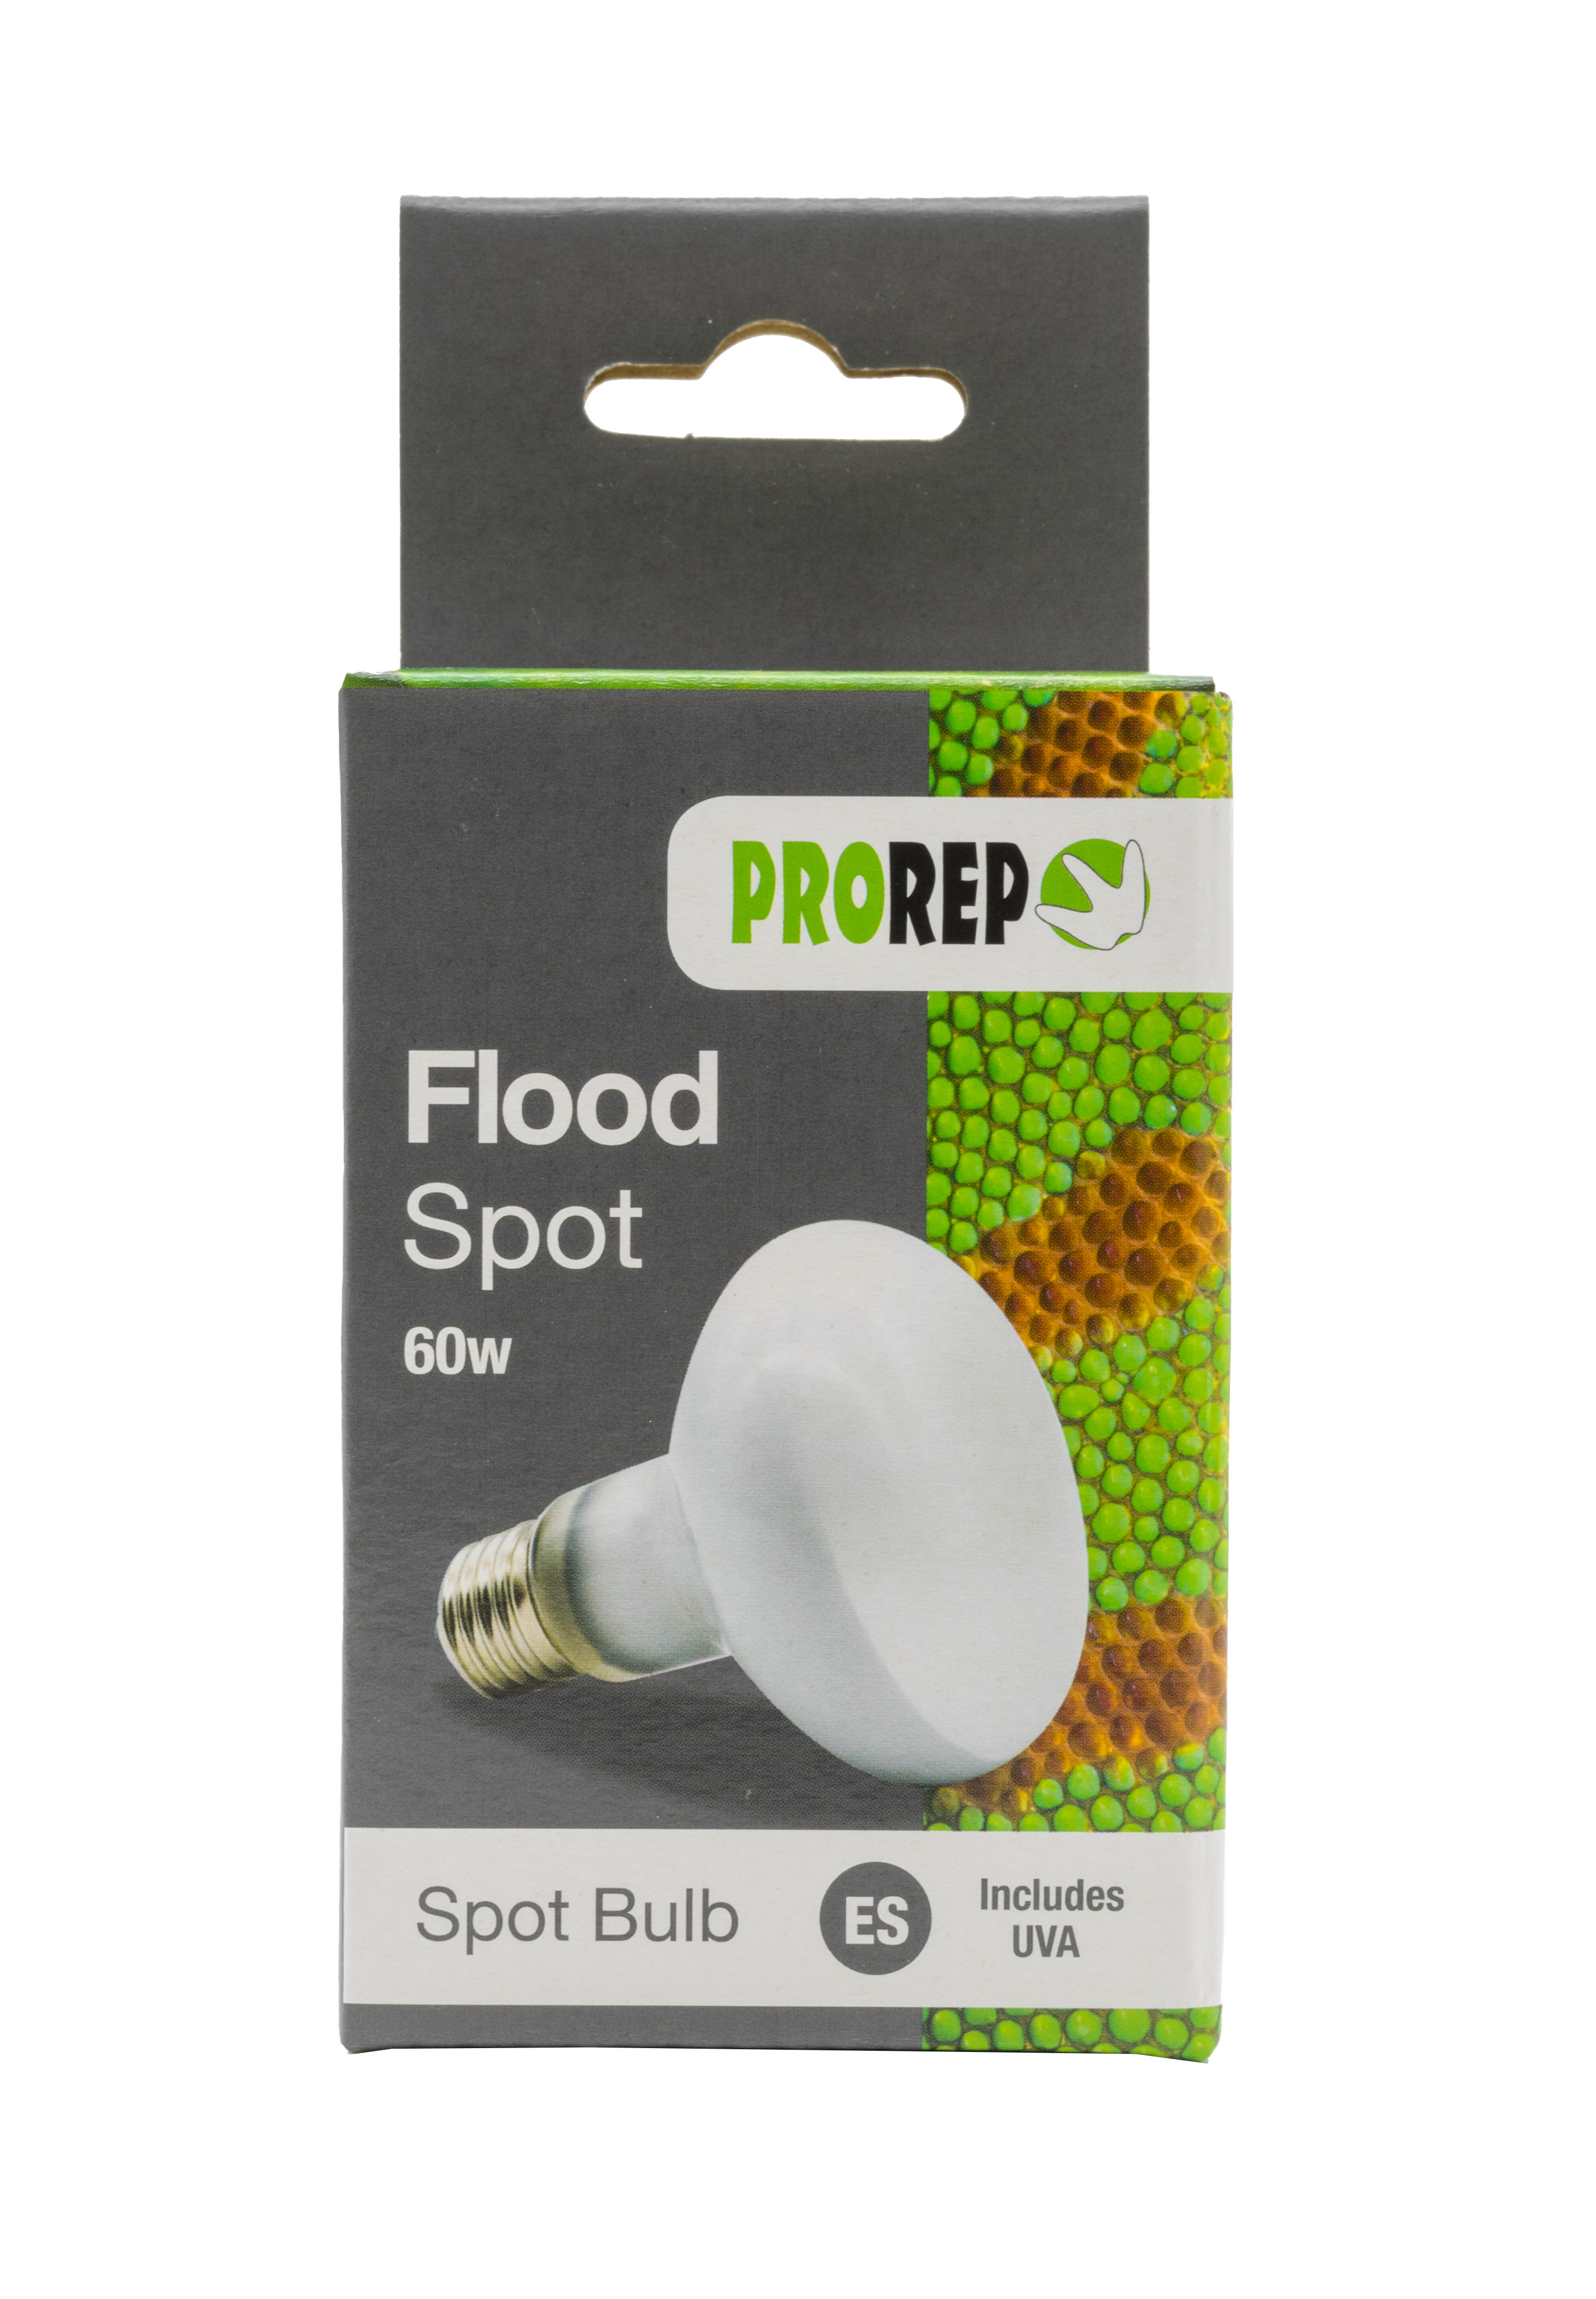 ProRep Flood Spot Lamp 60w ES